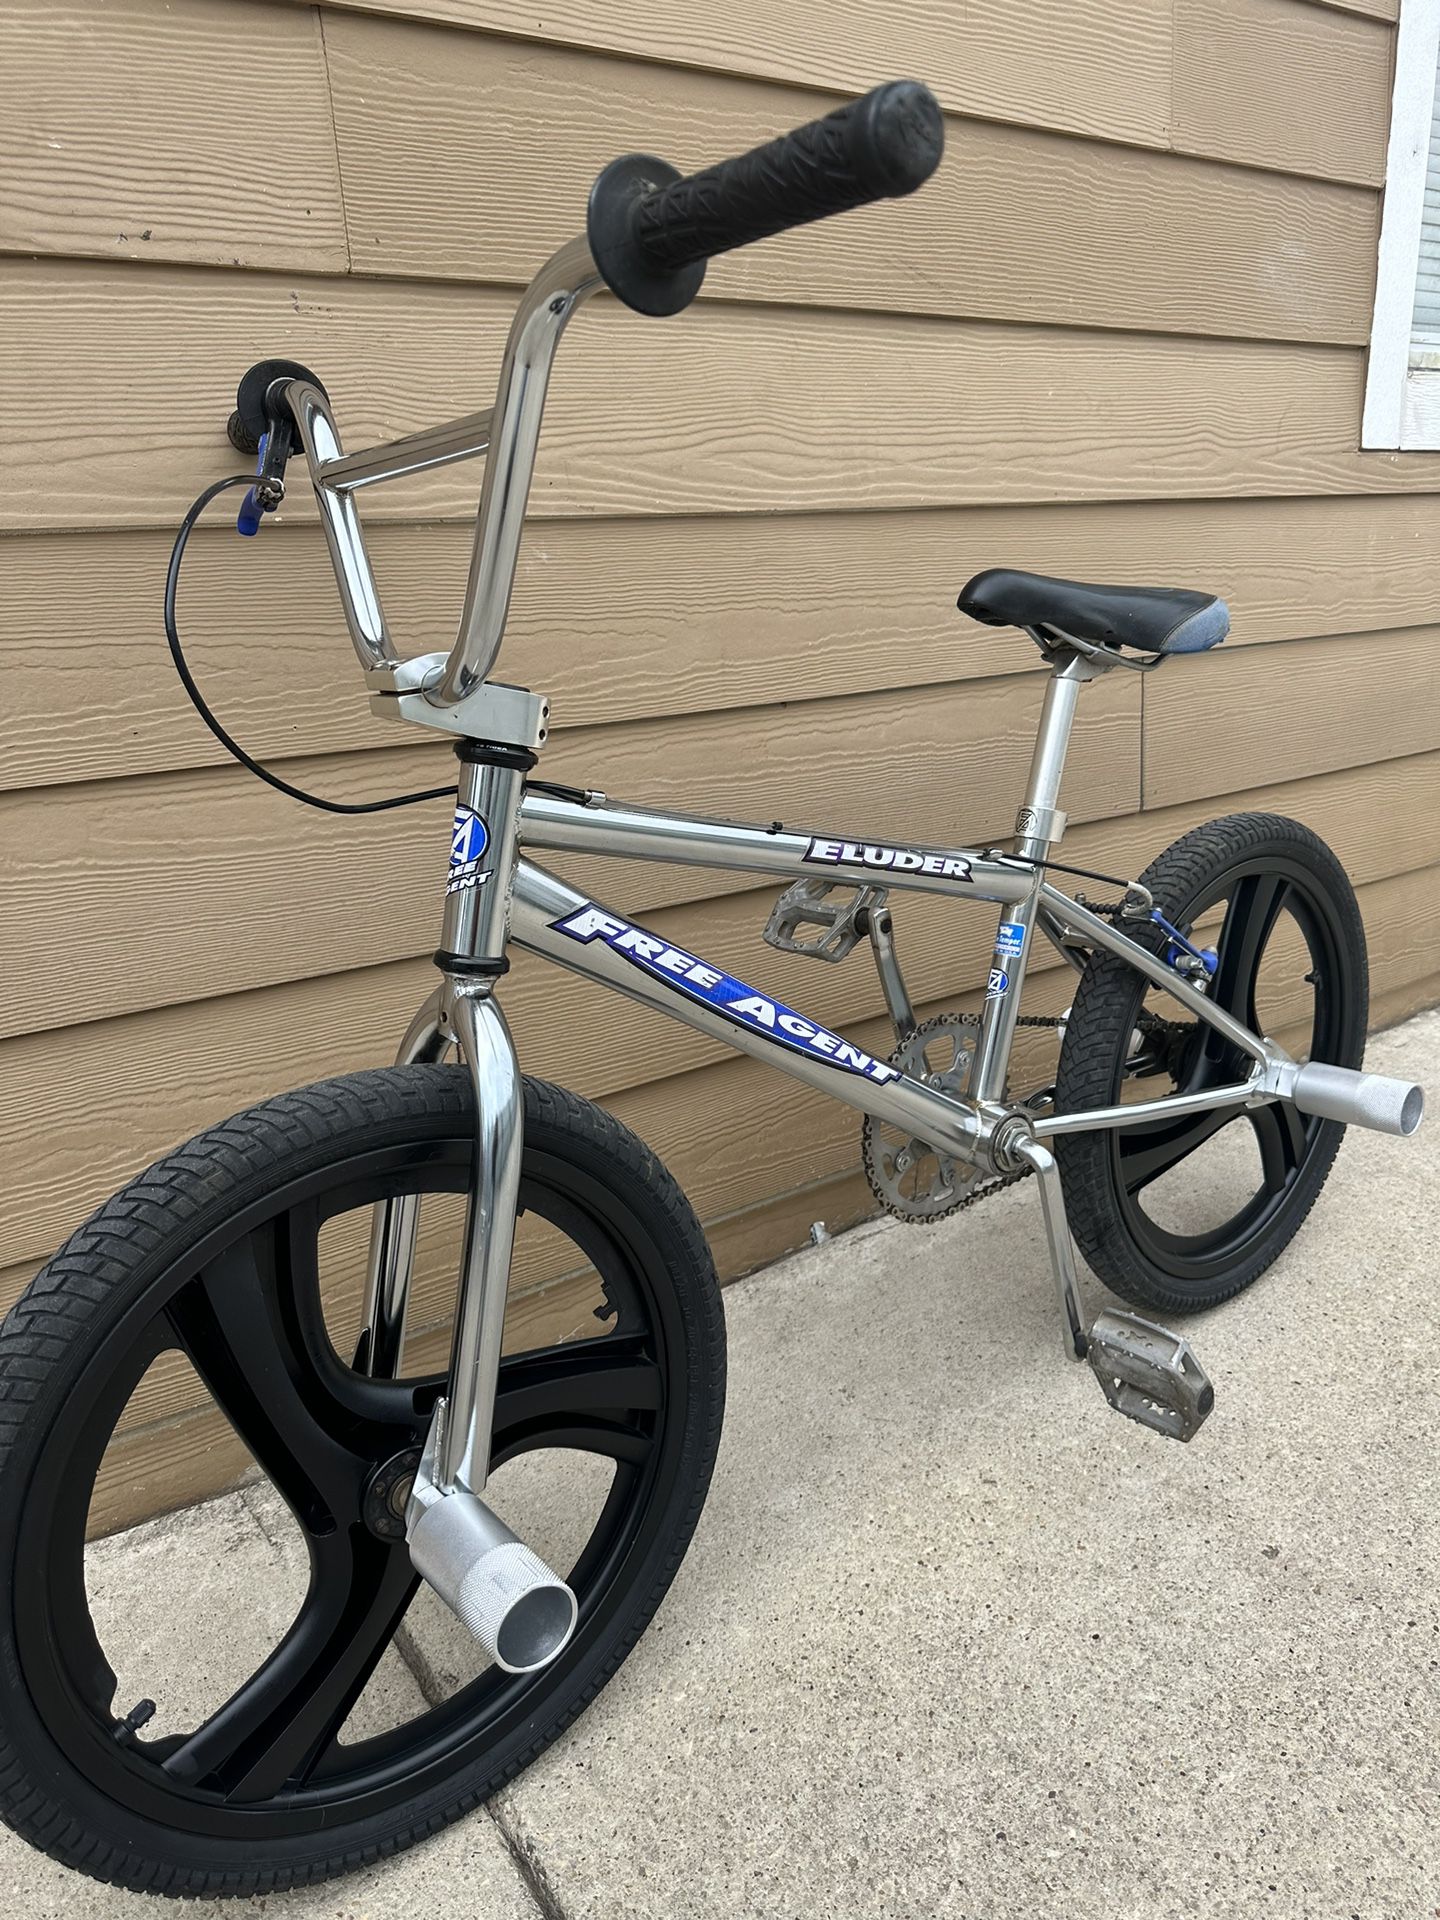 Bmx Bike 🚲 Sz 20